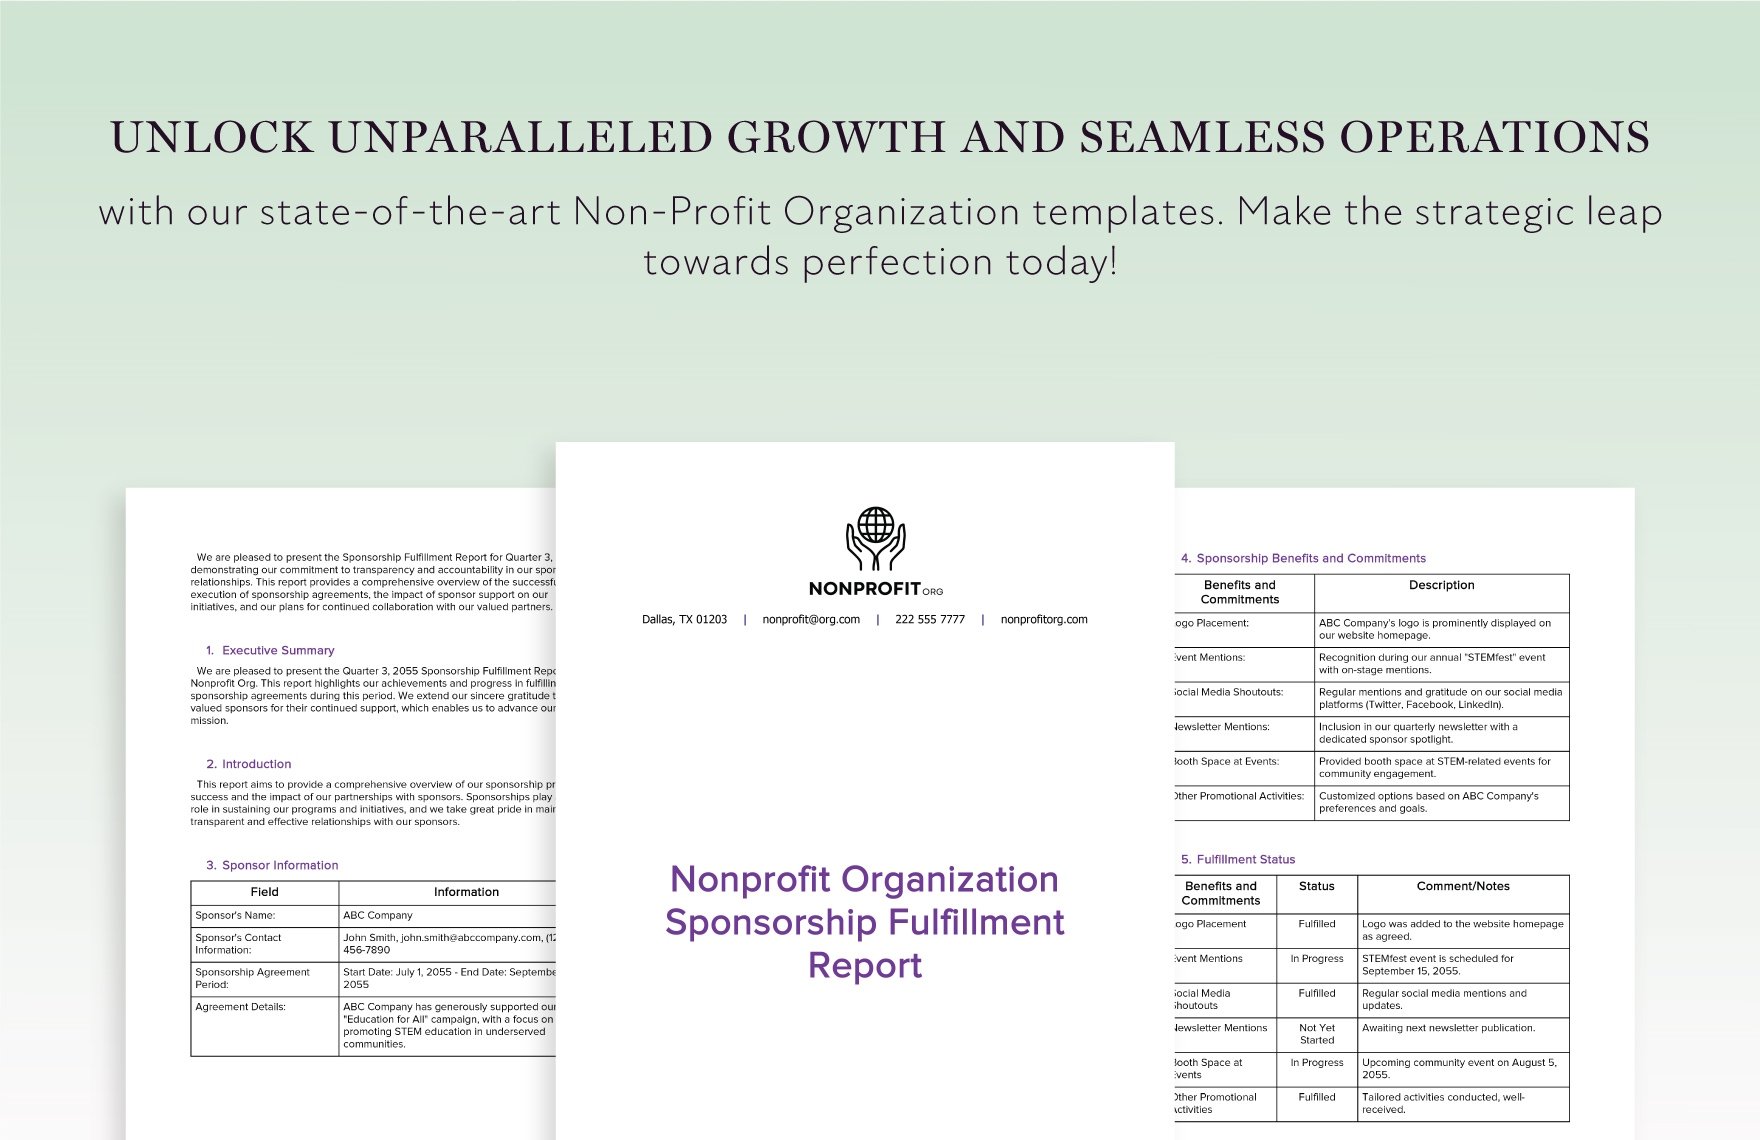 Nonprofit Organization Sponsorship Fulfillment Report Template